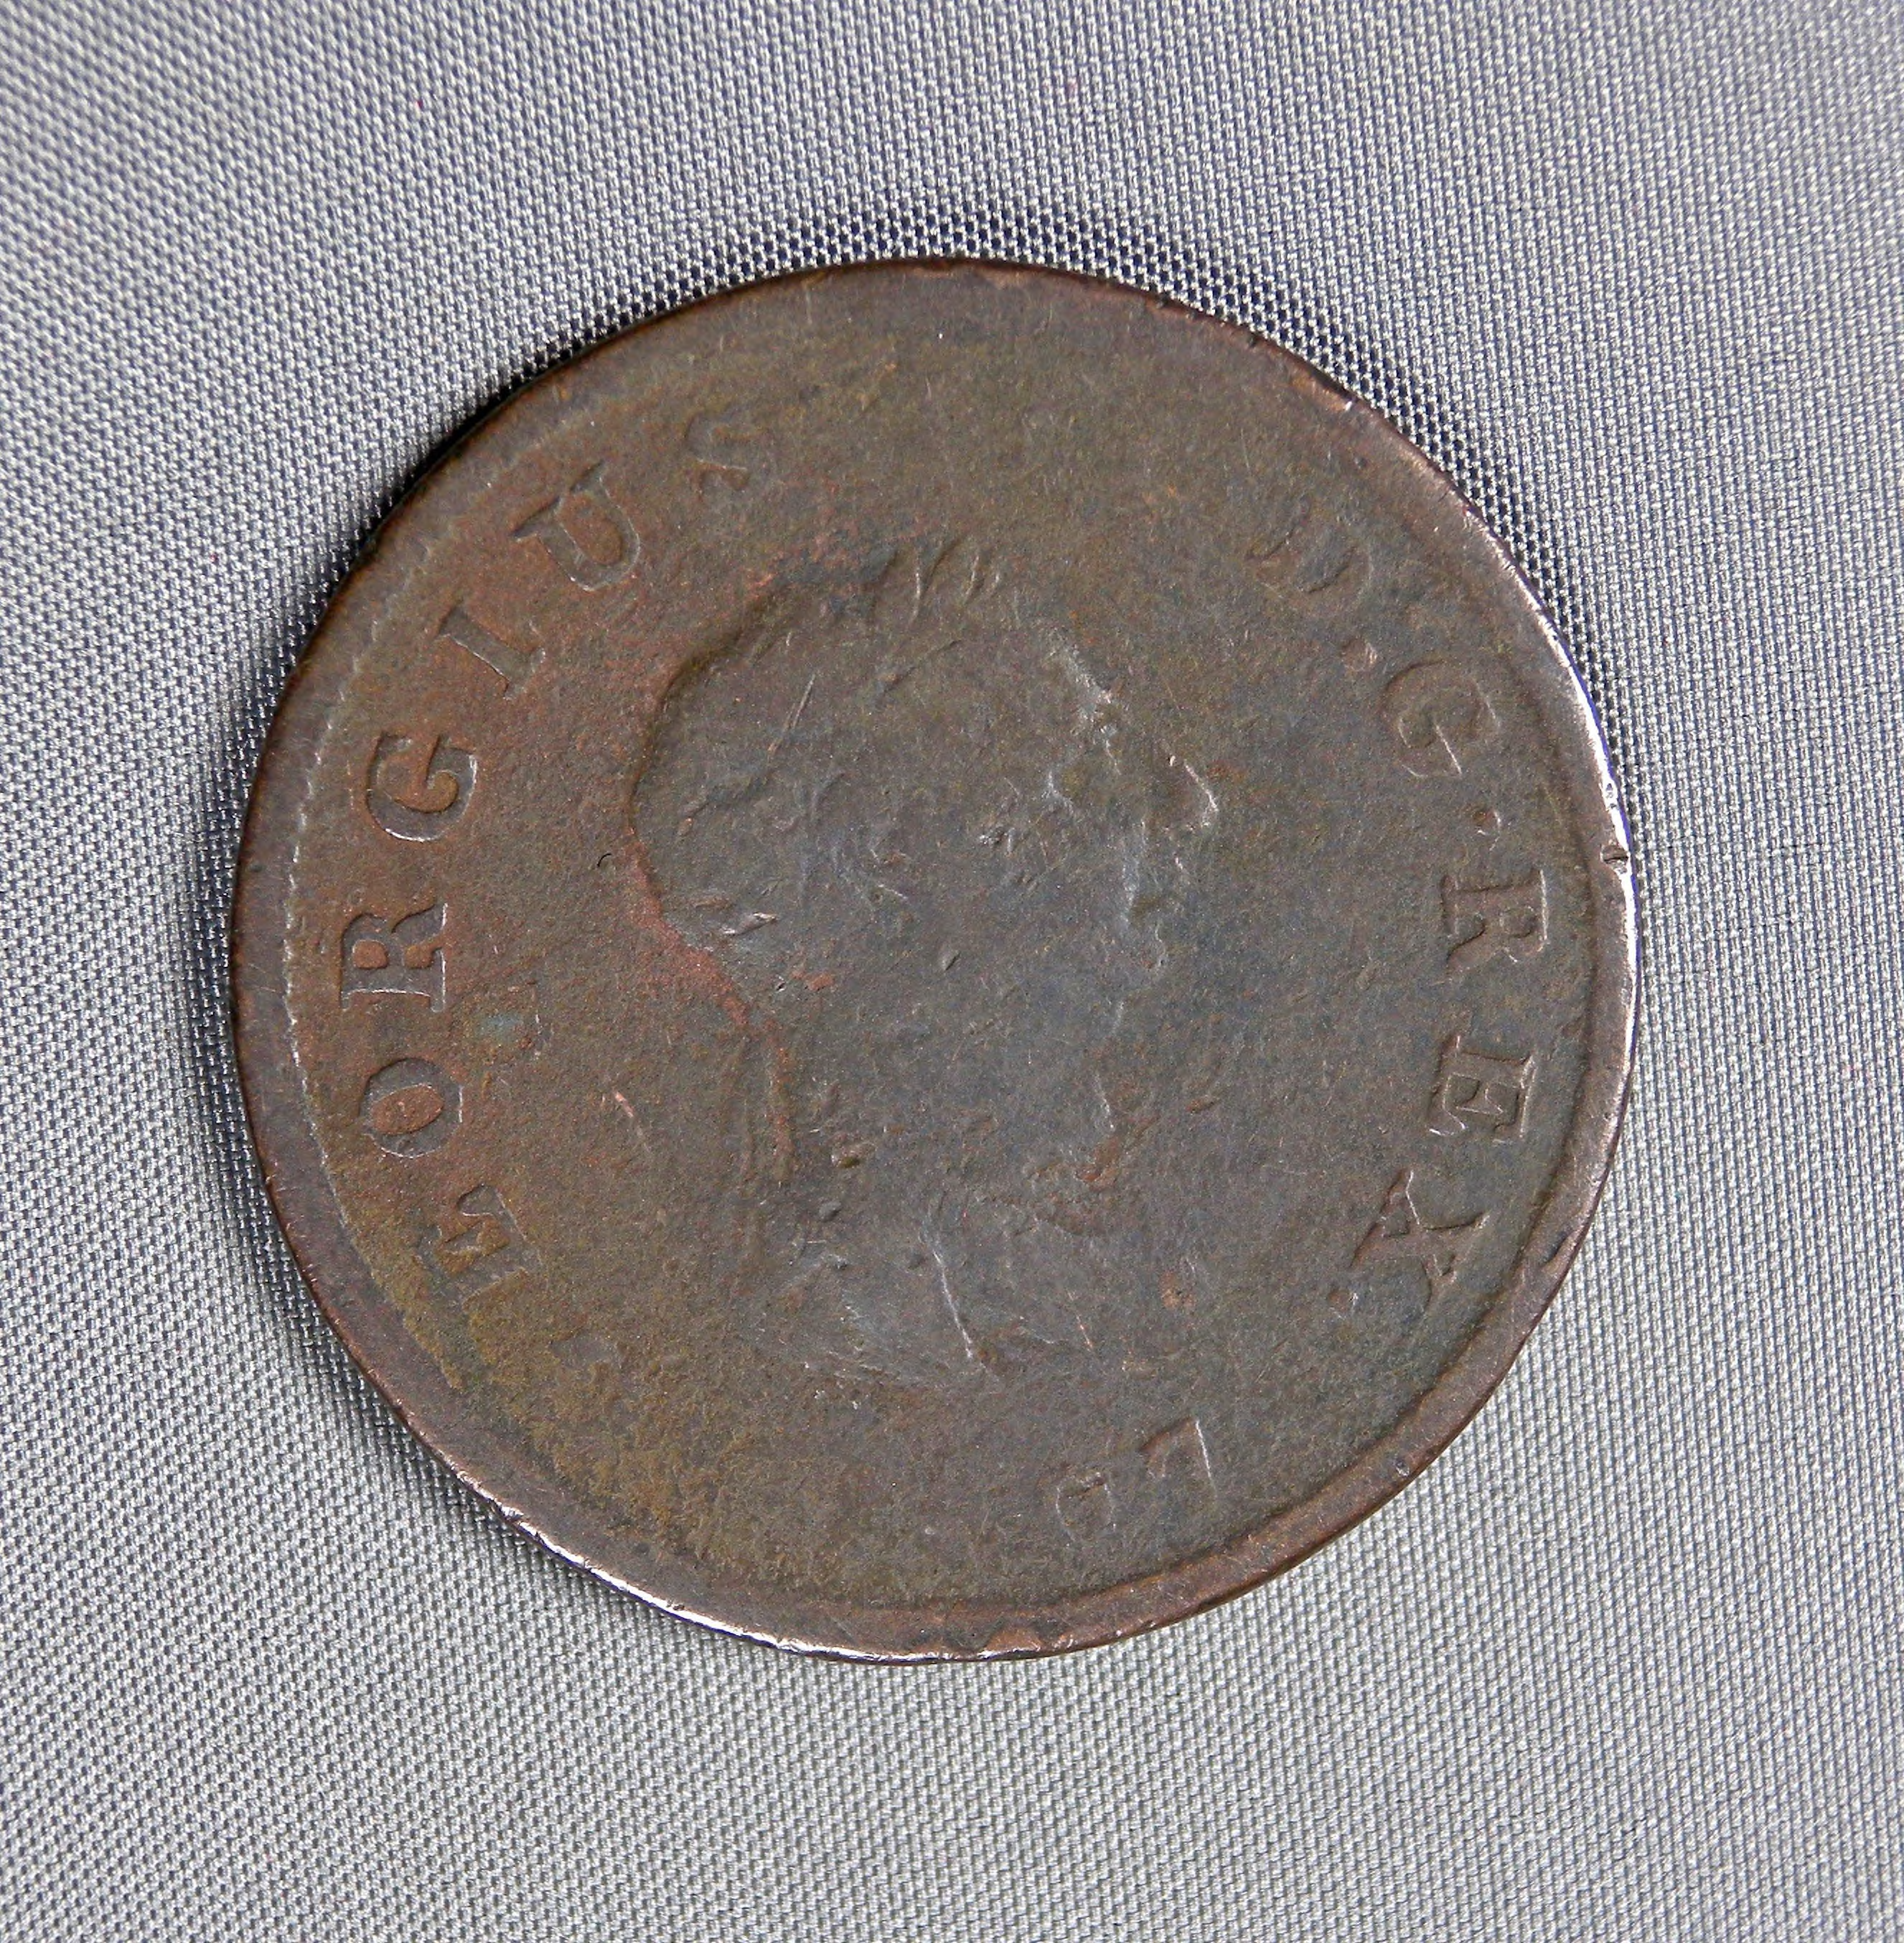 king-george-iii-1807-coin-1812-history